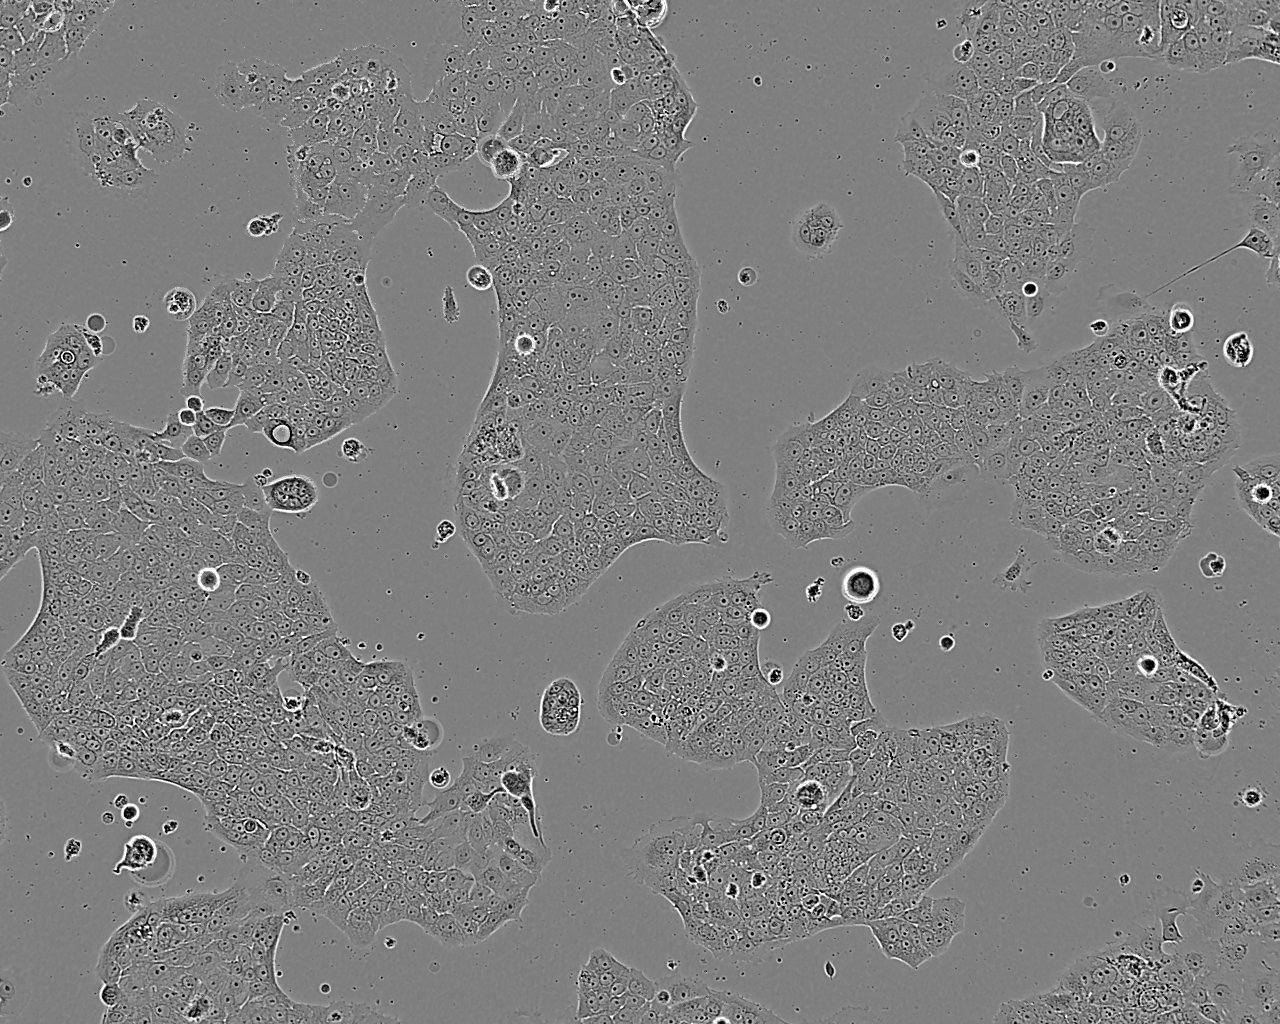 GC-1 spg epithelioid cells小鼠精原细胞系,GC-1 spg epithelioid cells